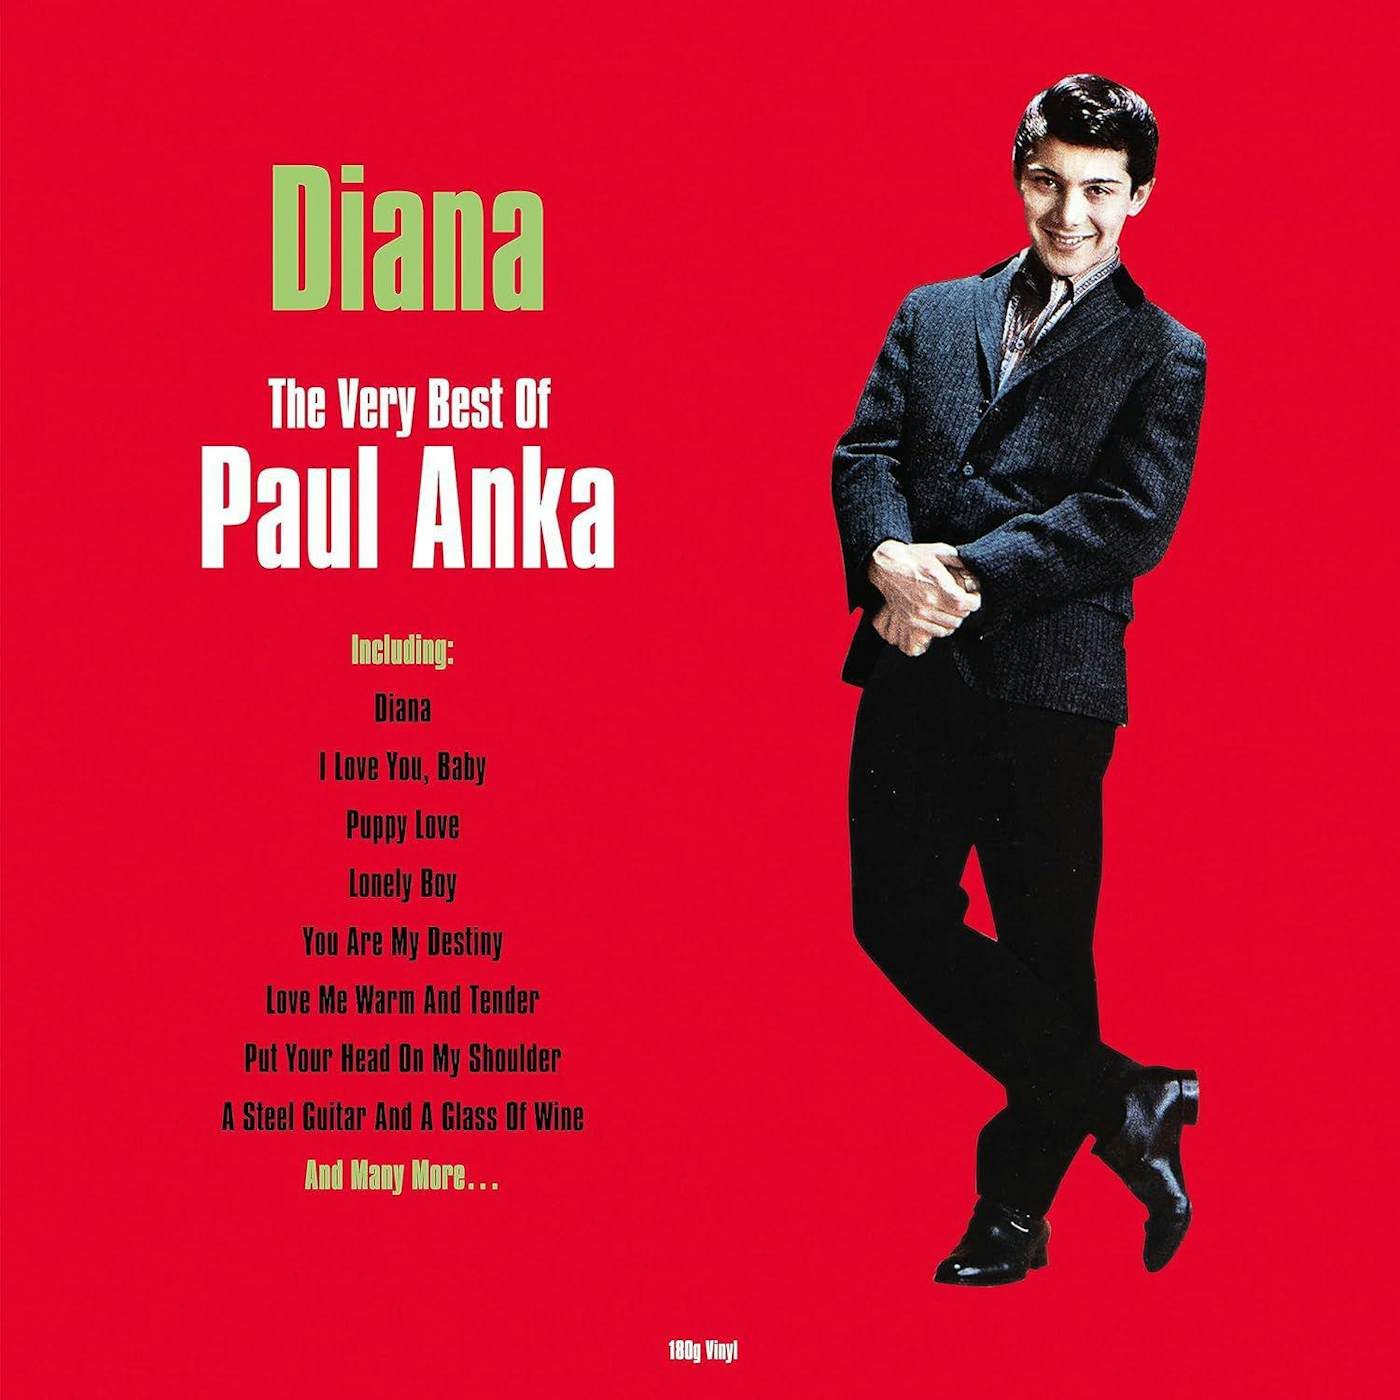 Diana: The Very Best Of Paul Anka (180G) Vinyl Record